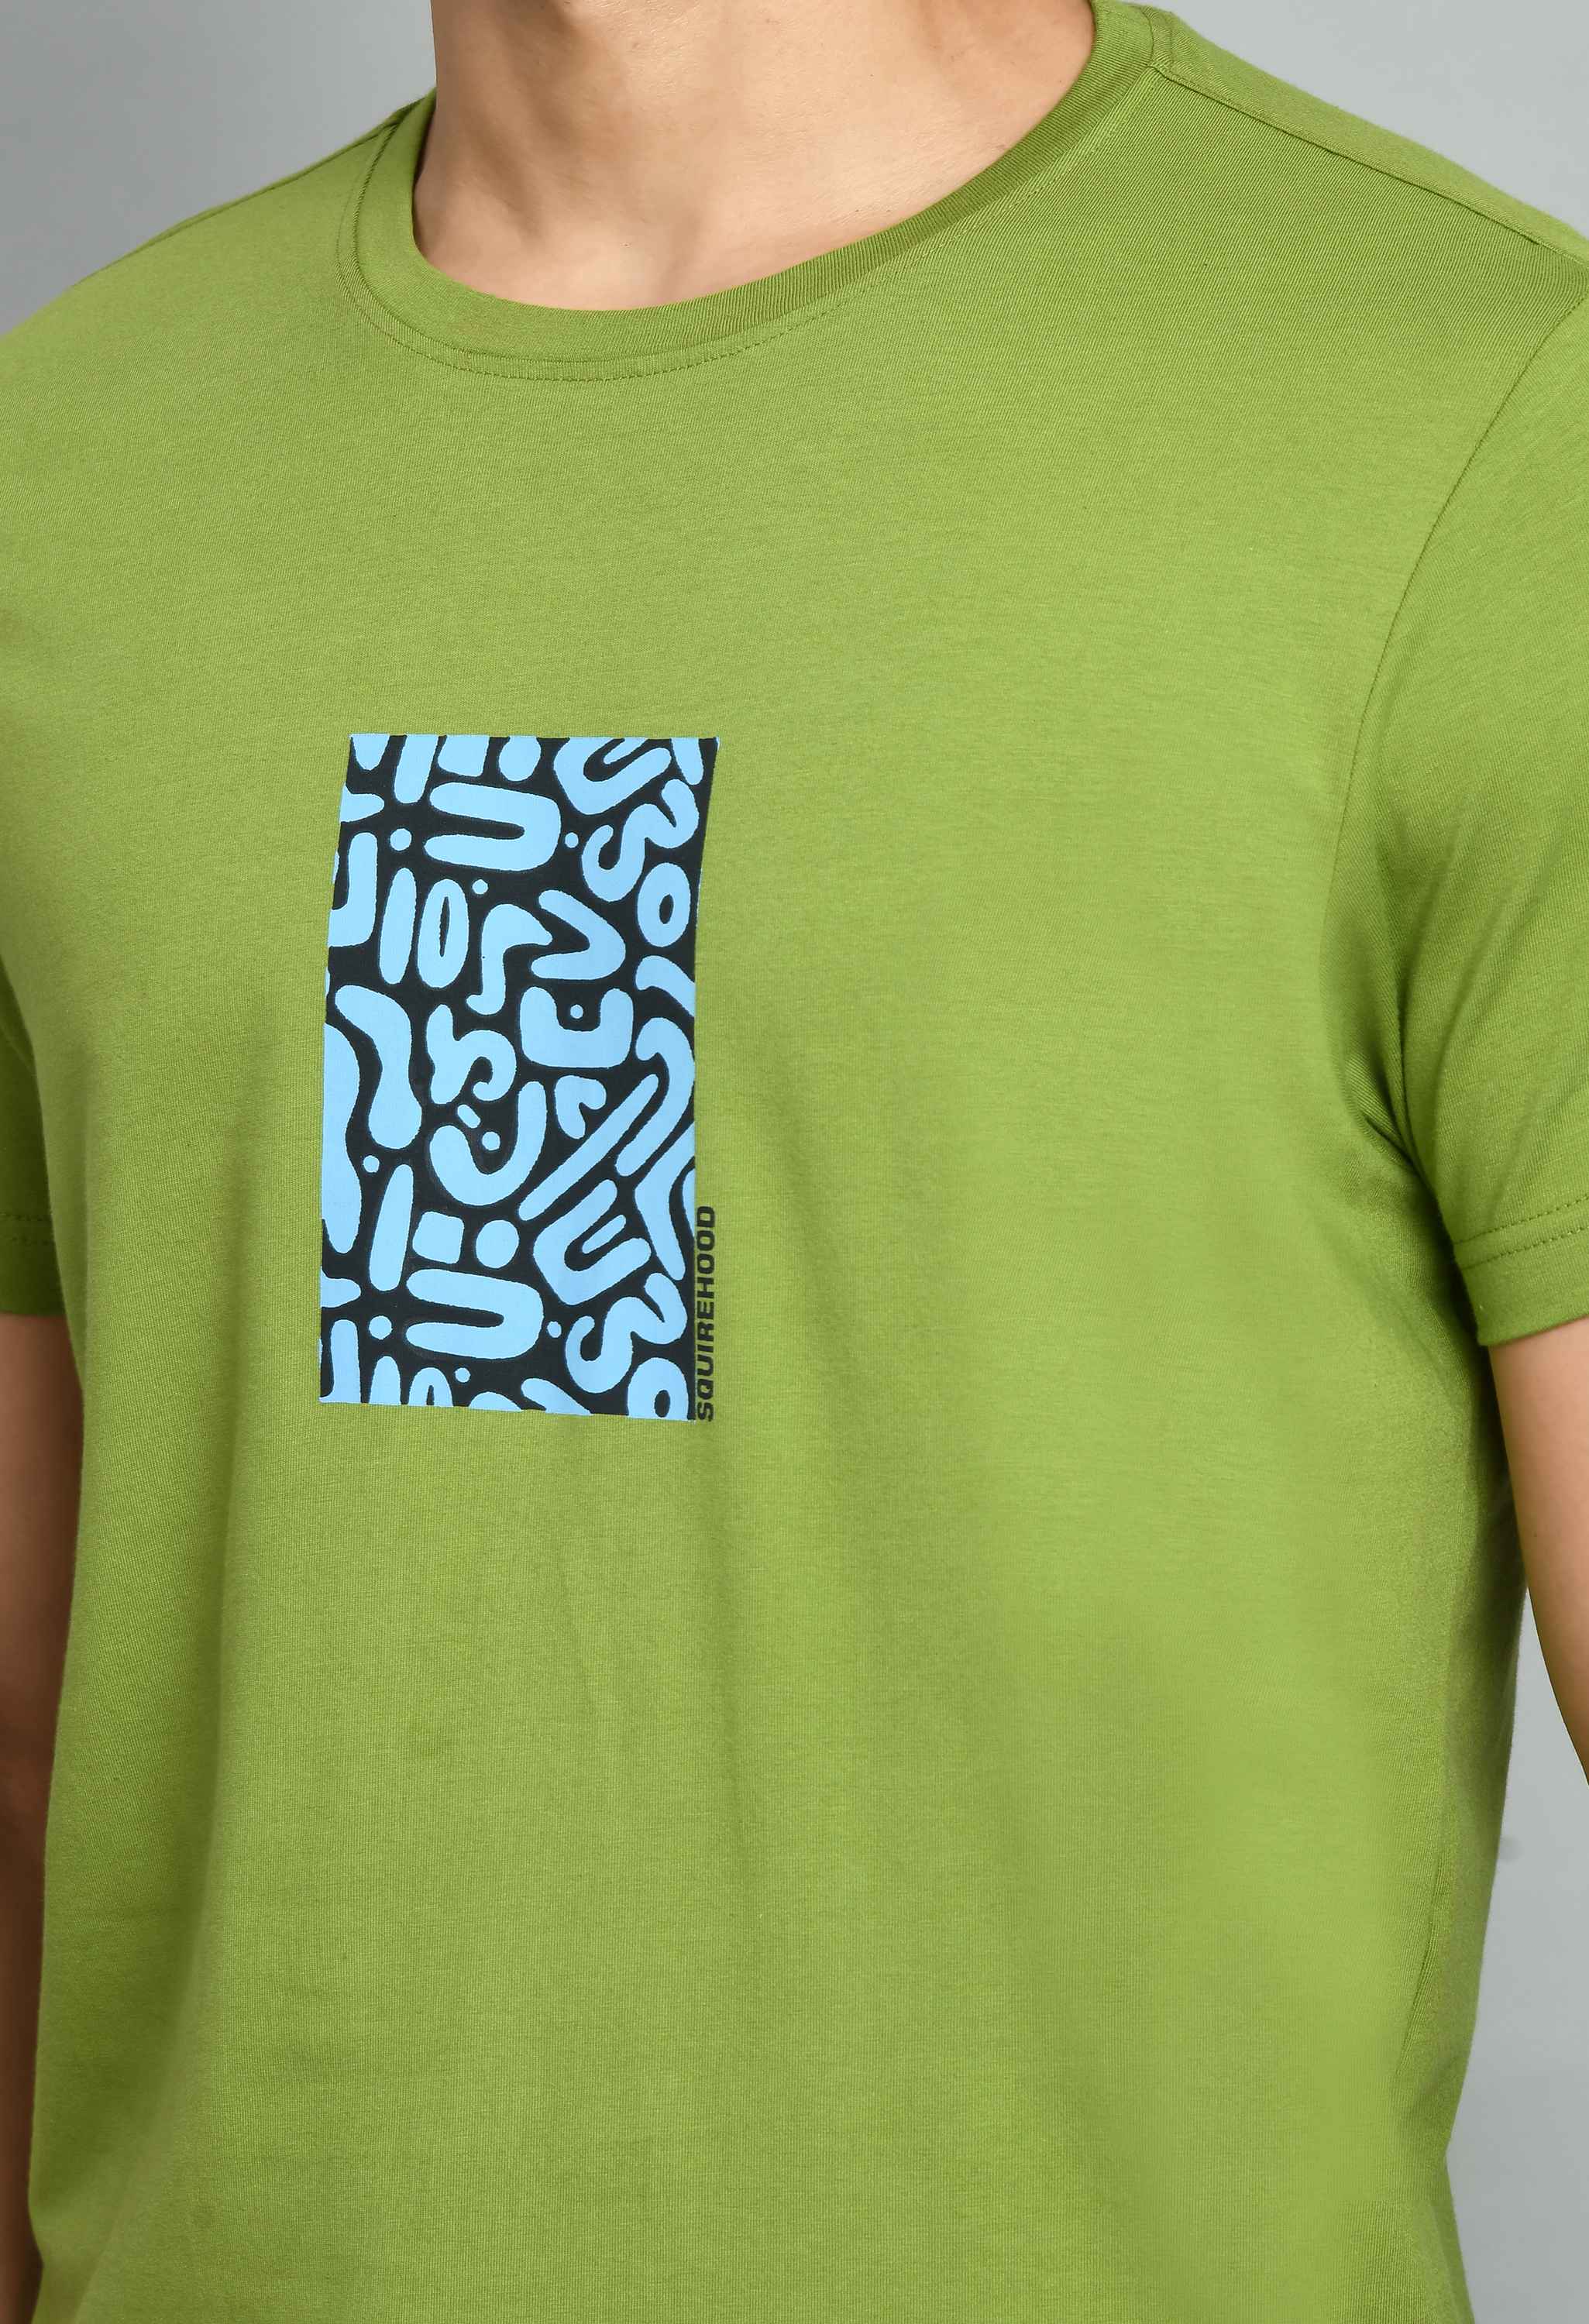 Men's Parrot Grapic Printed T-Shirt